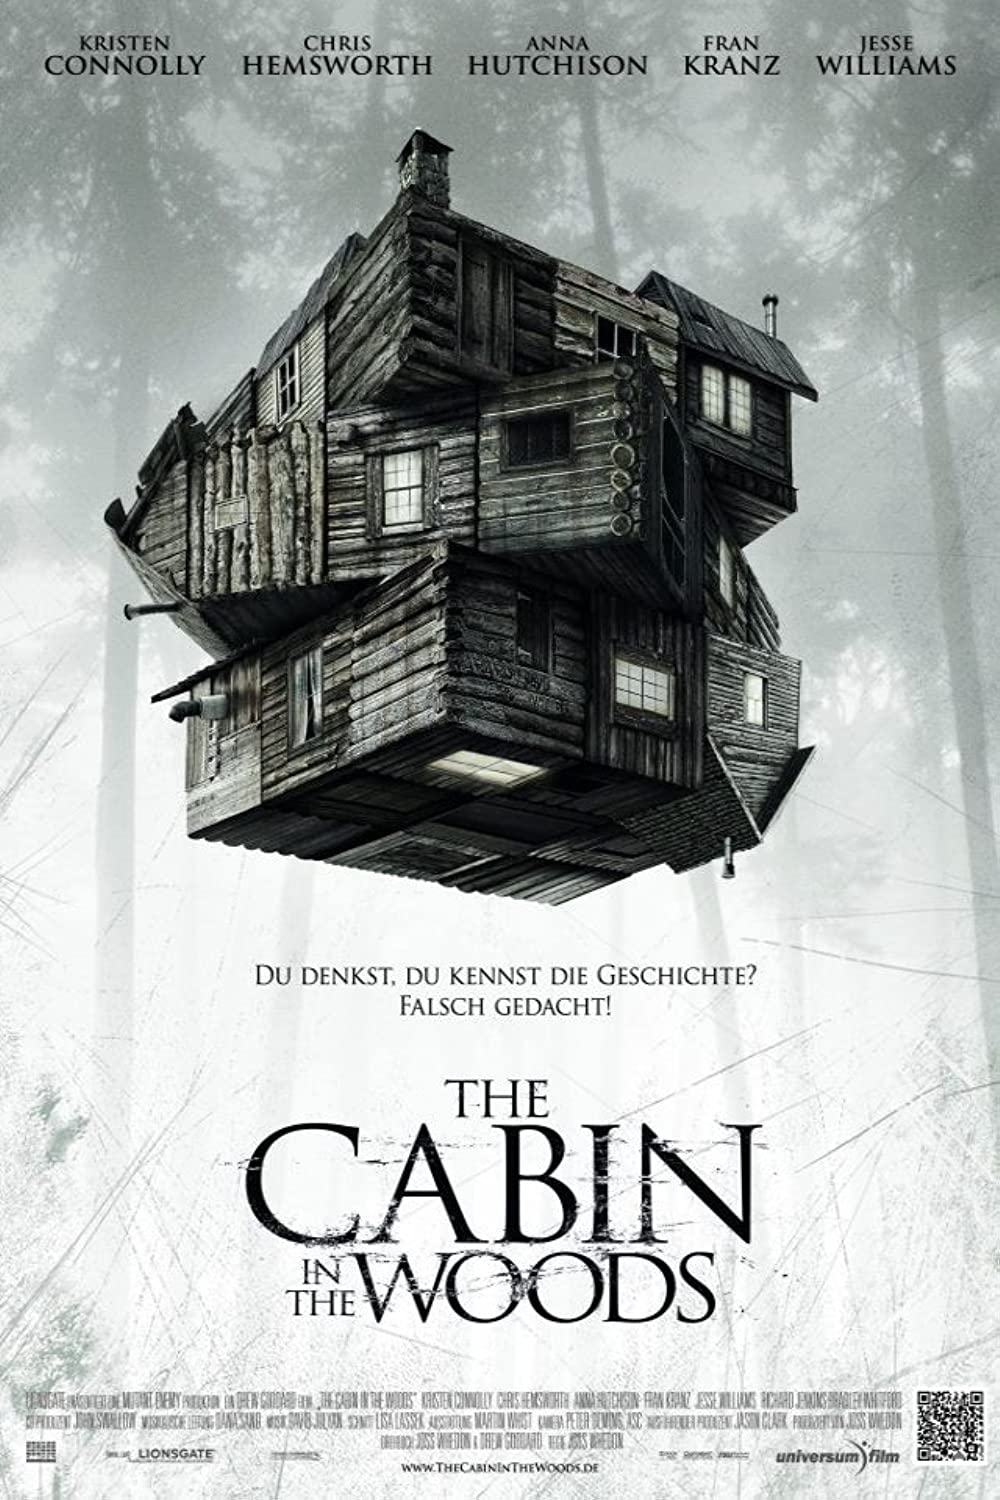 Filmbeschreibung zu The Cabin in the Woods